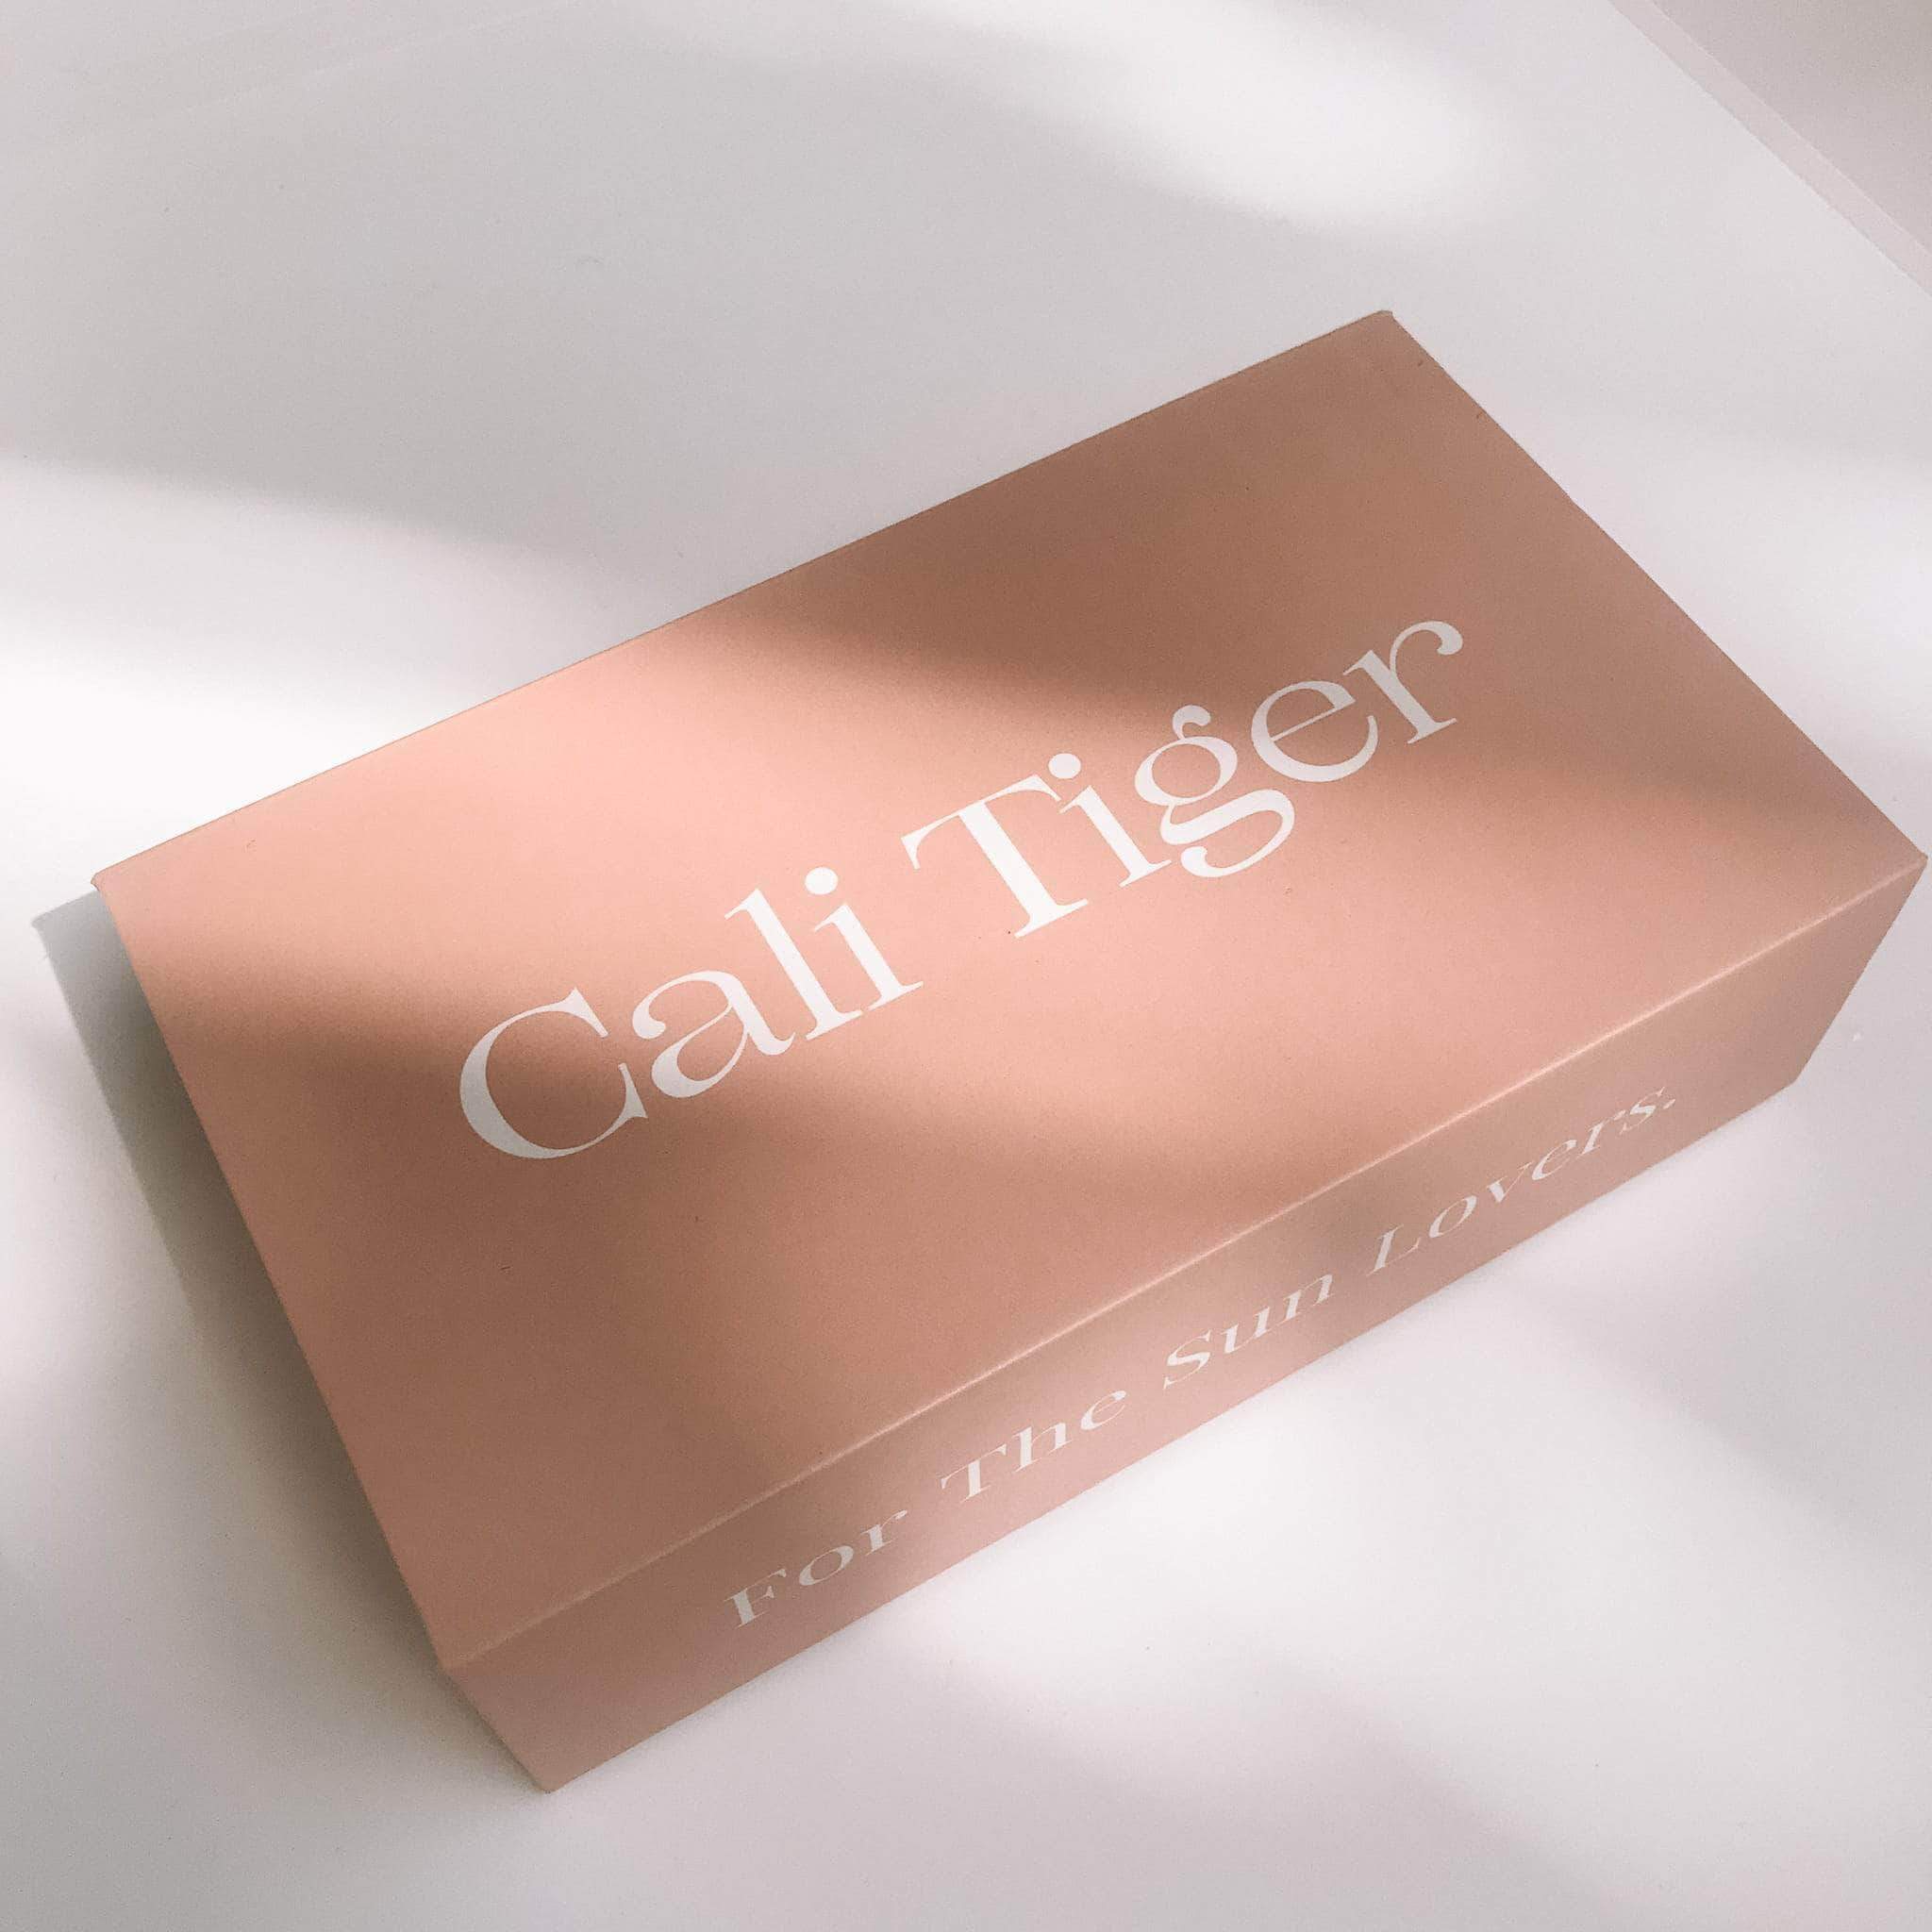 Cali Tiger 'For The Sun Lovers' Box - Cali Tiger